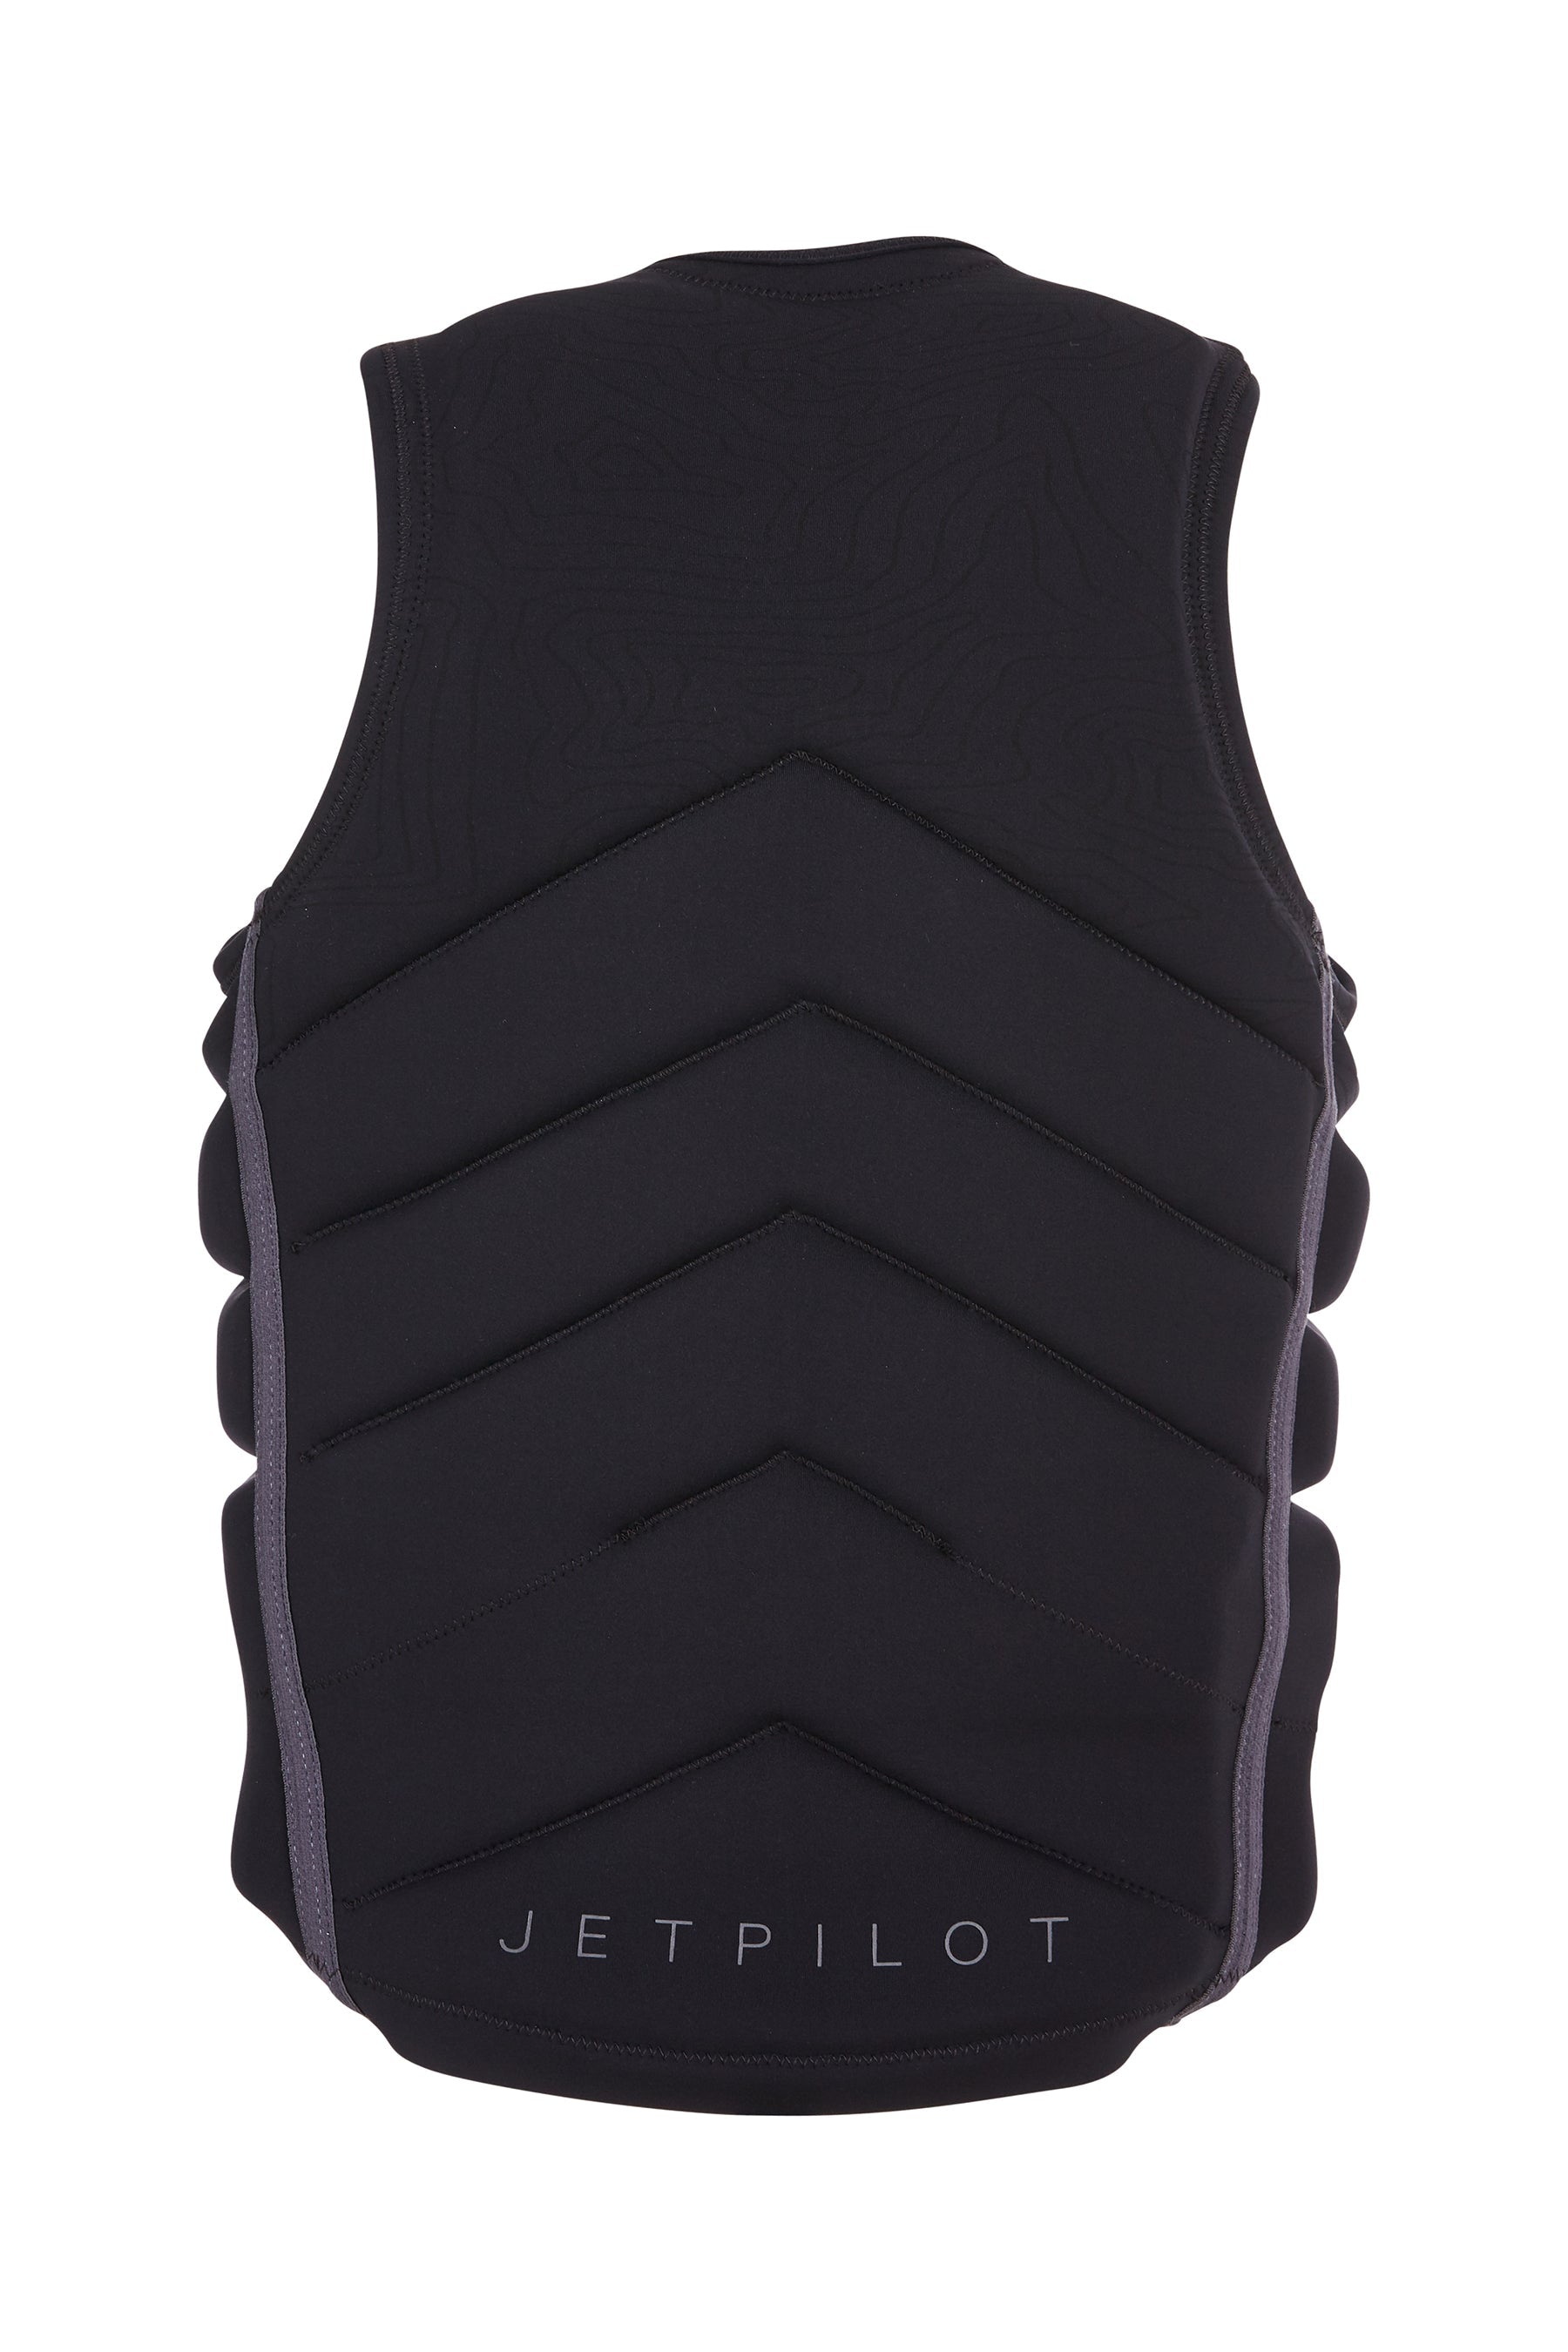 Jetpilot X1 - Felix Fe Mens Neo Vest - Black BAck